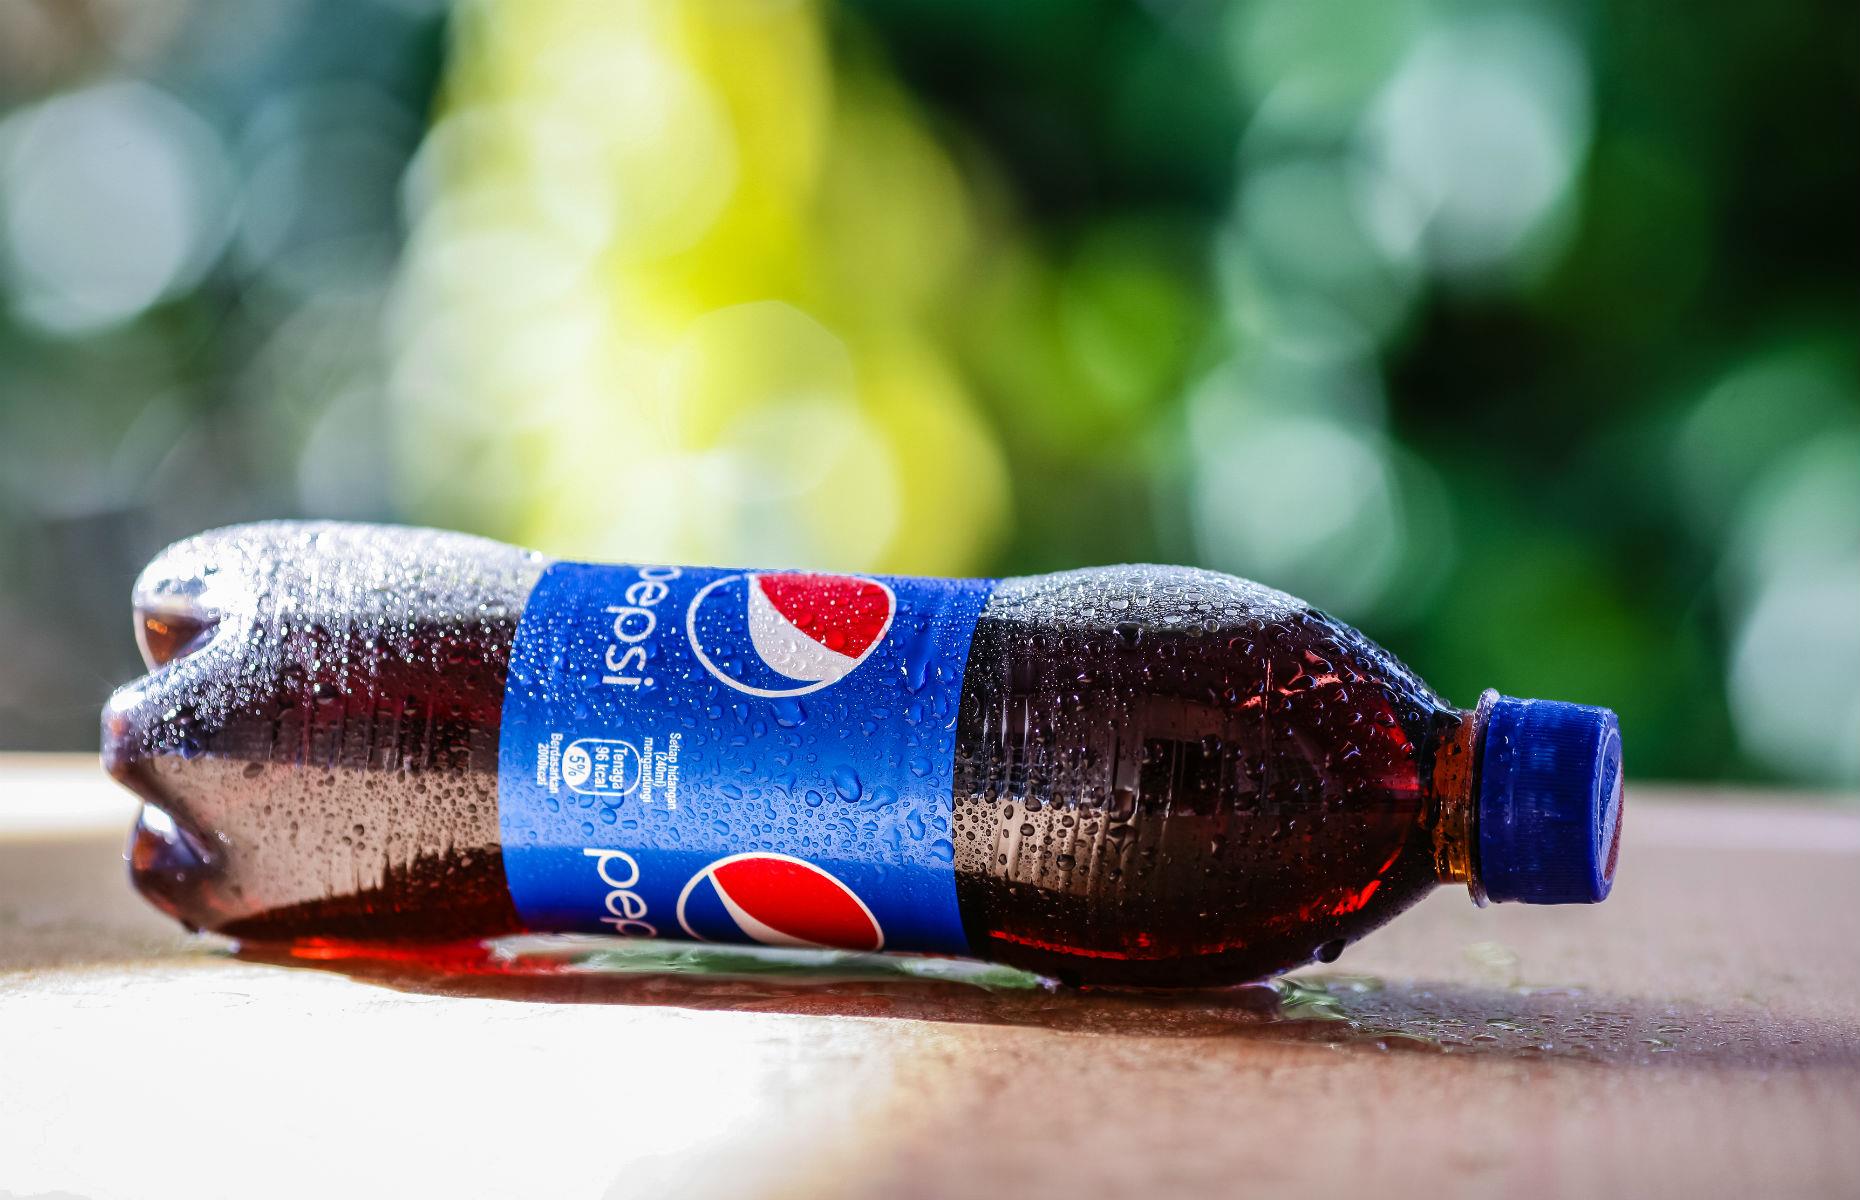 Pepsi-Cola, formerly Brad’s Drink